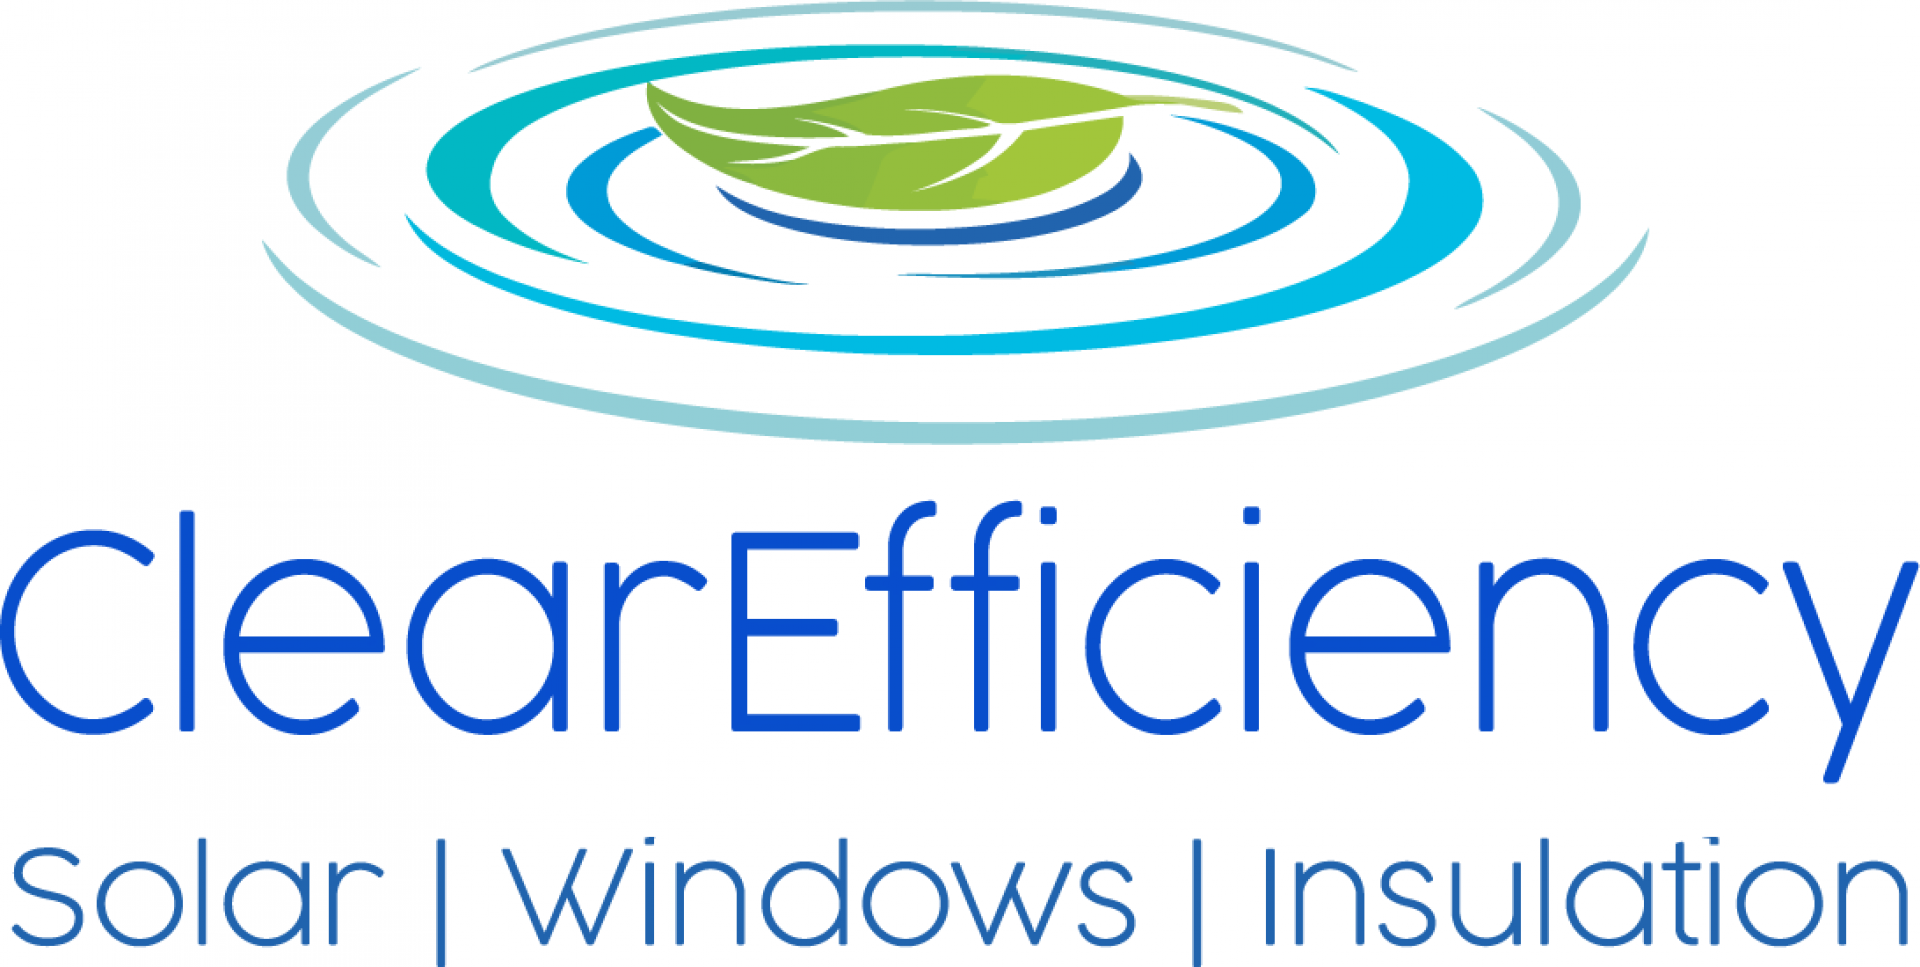 Clear Efficiency Home Improvement company logo